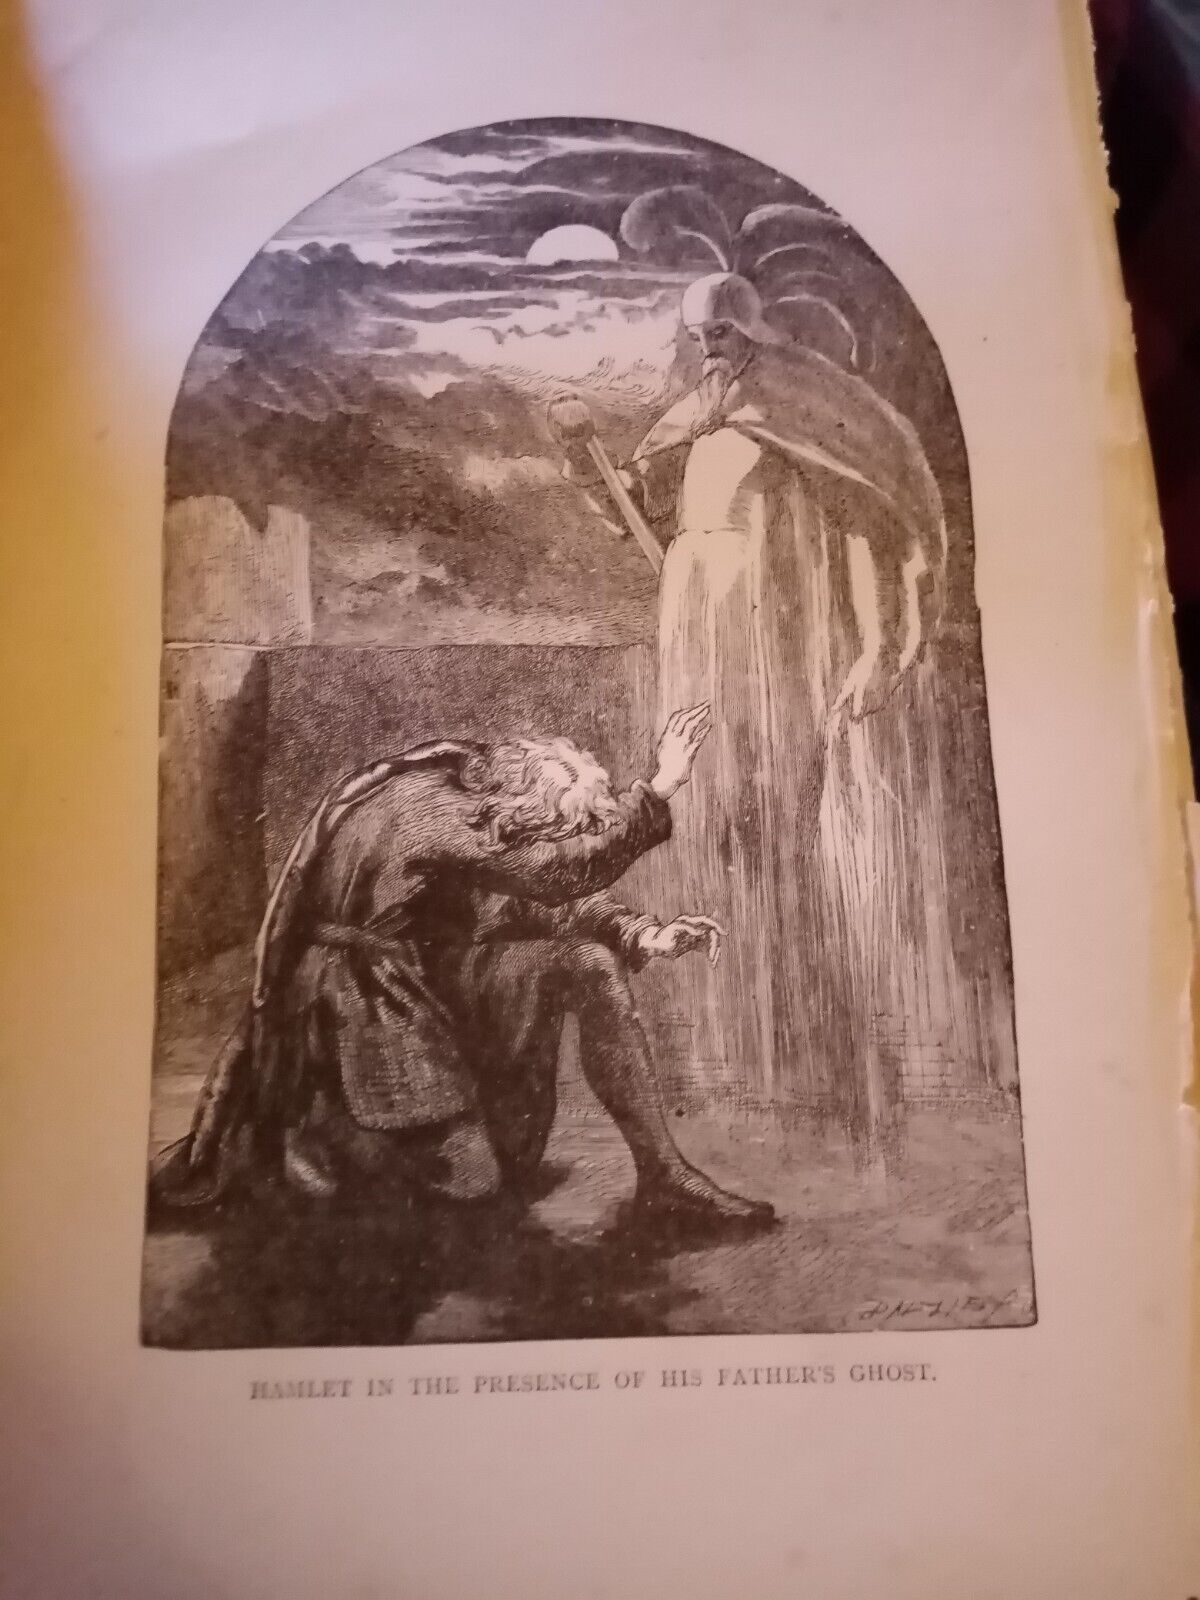 Kvc25 Ephemera 1880s Shakespeare Gilbert  picture hamlet and the ghost 